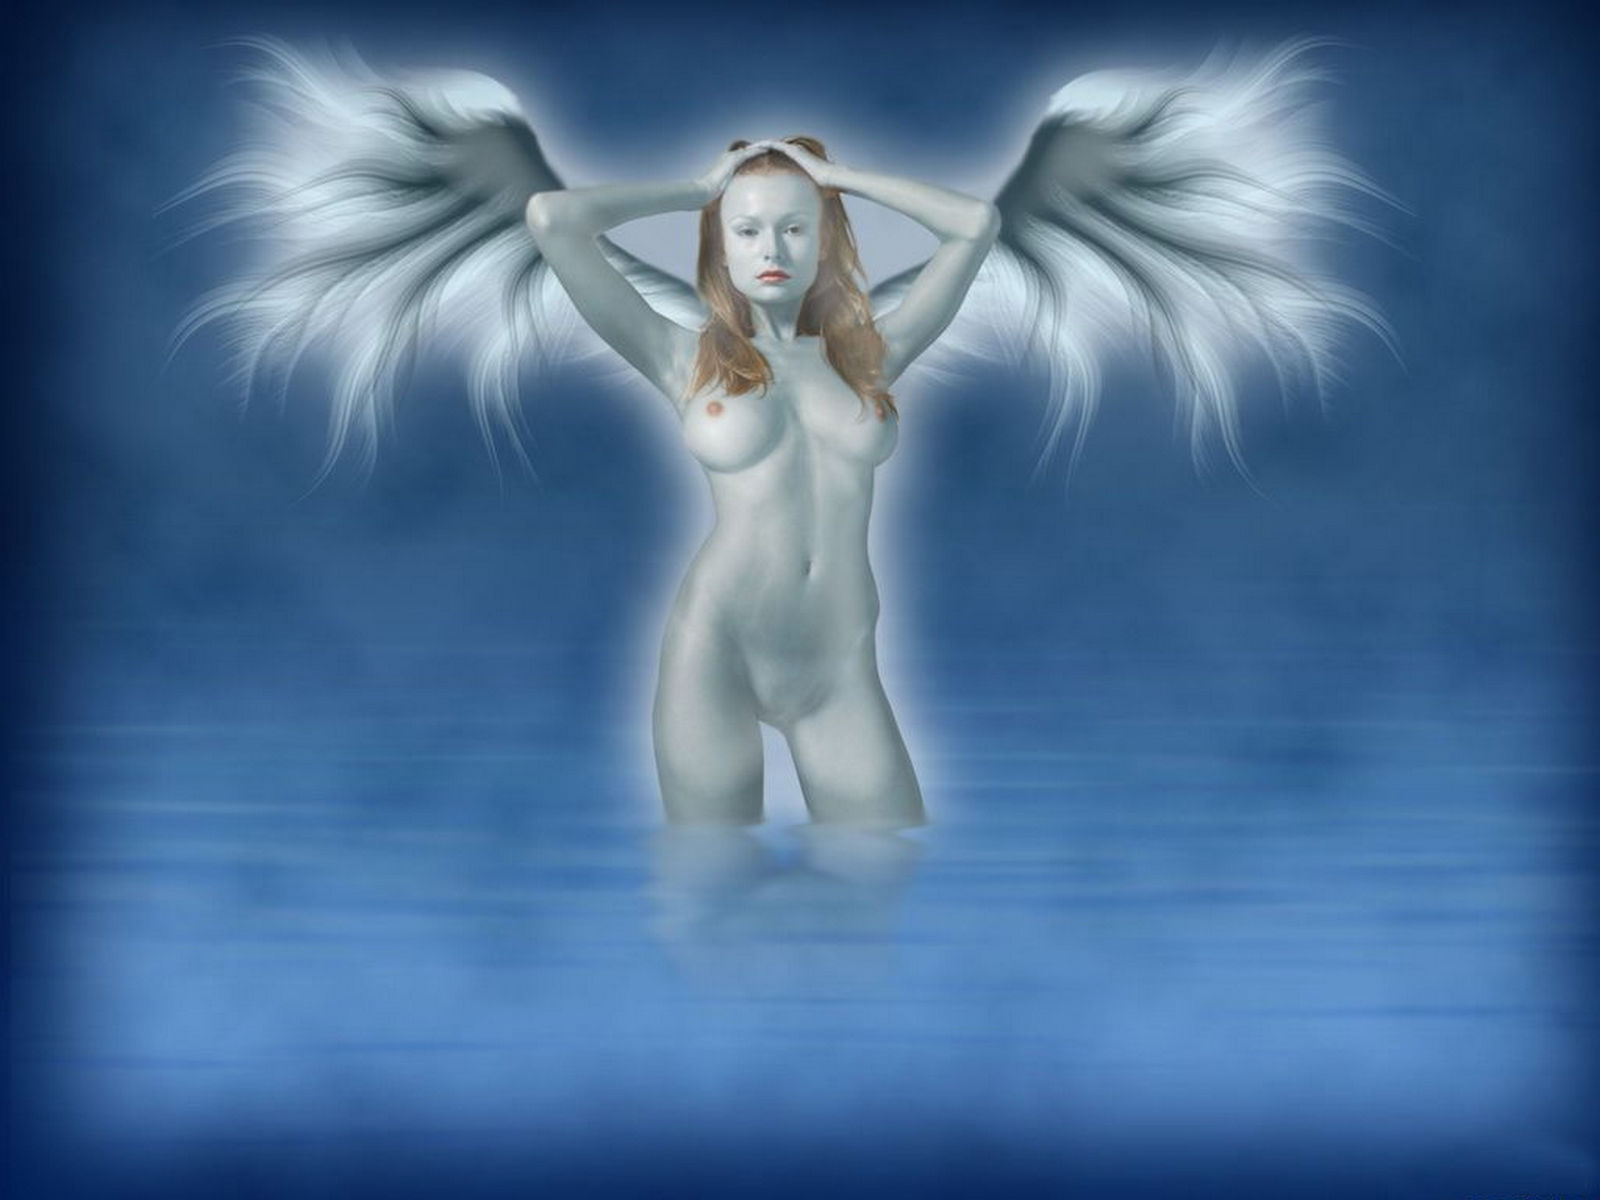 Of The Angel Wallpaper Water 3d For Desktop Pictures